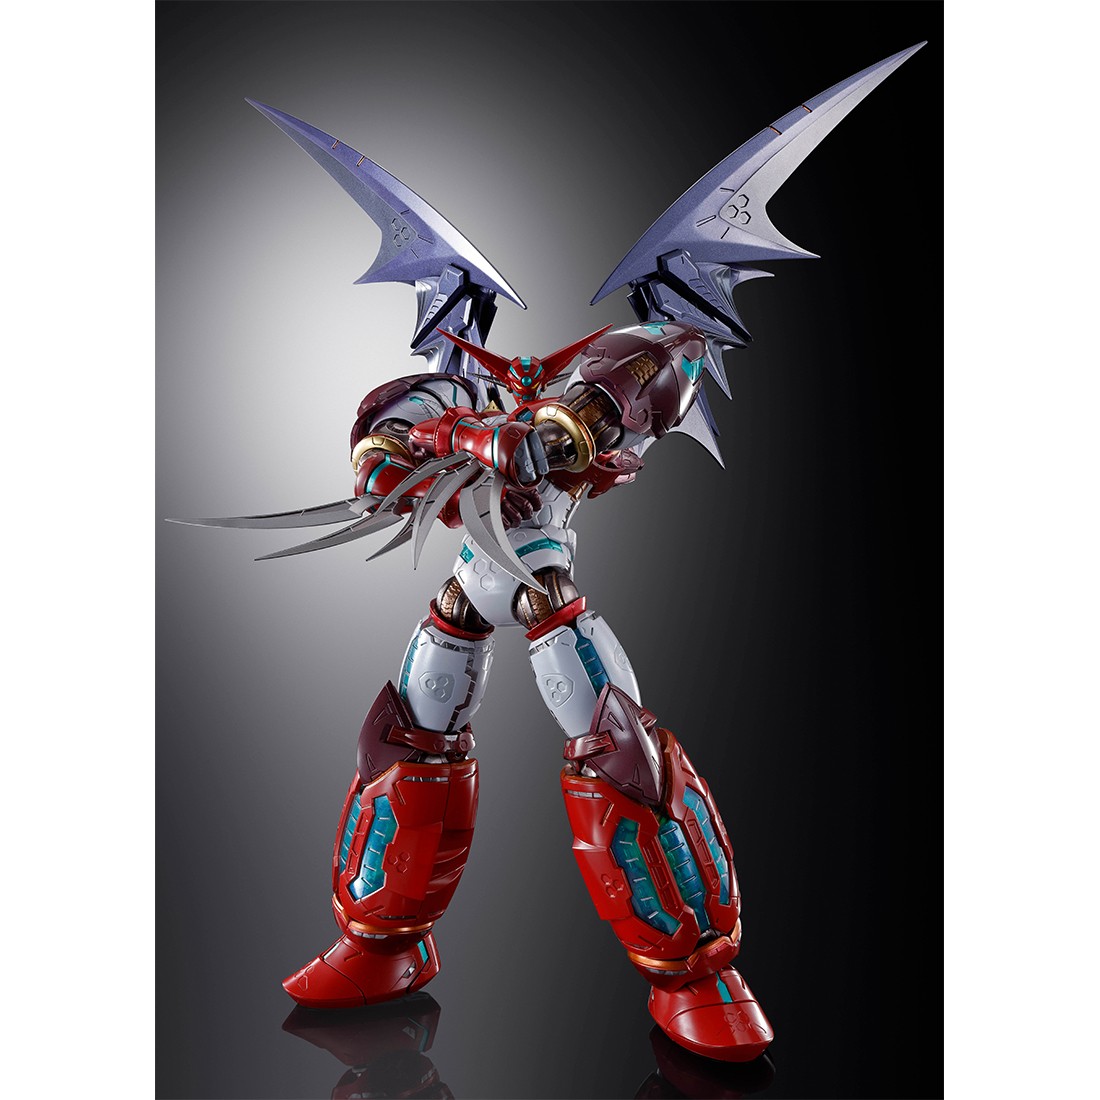 PREORDER - Bandai Metal Build Dragon Scale Getter Robo The Last day Shin Getter 1 Figure (red)